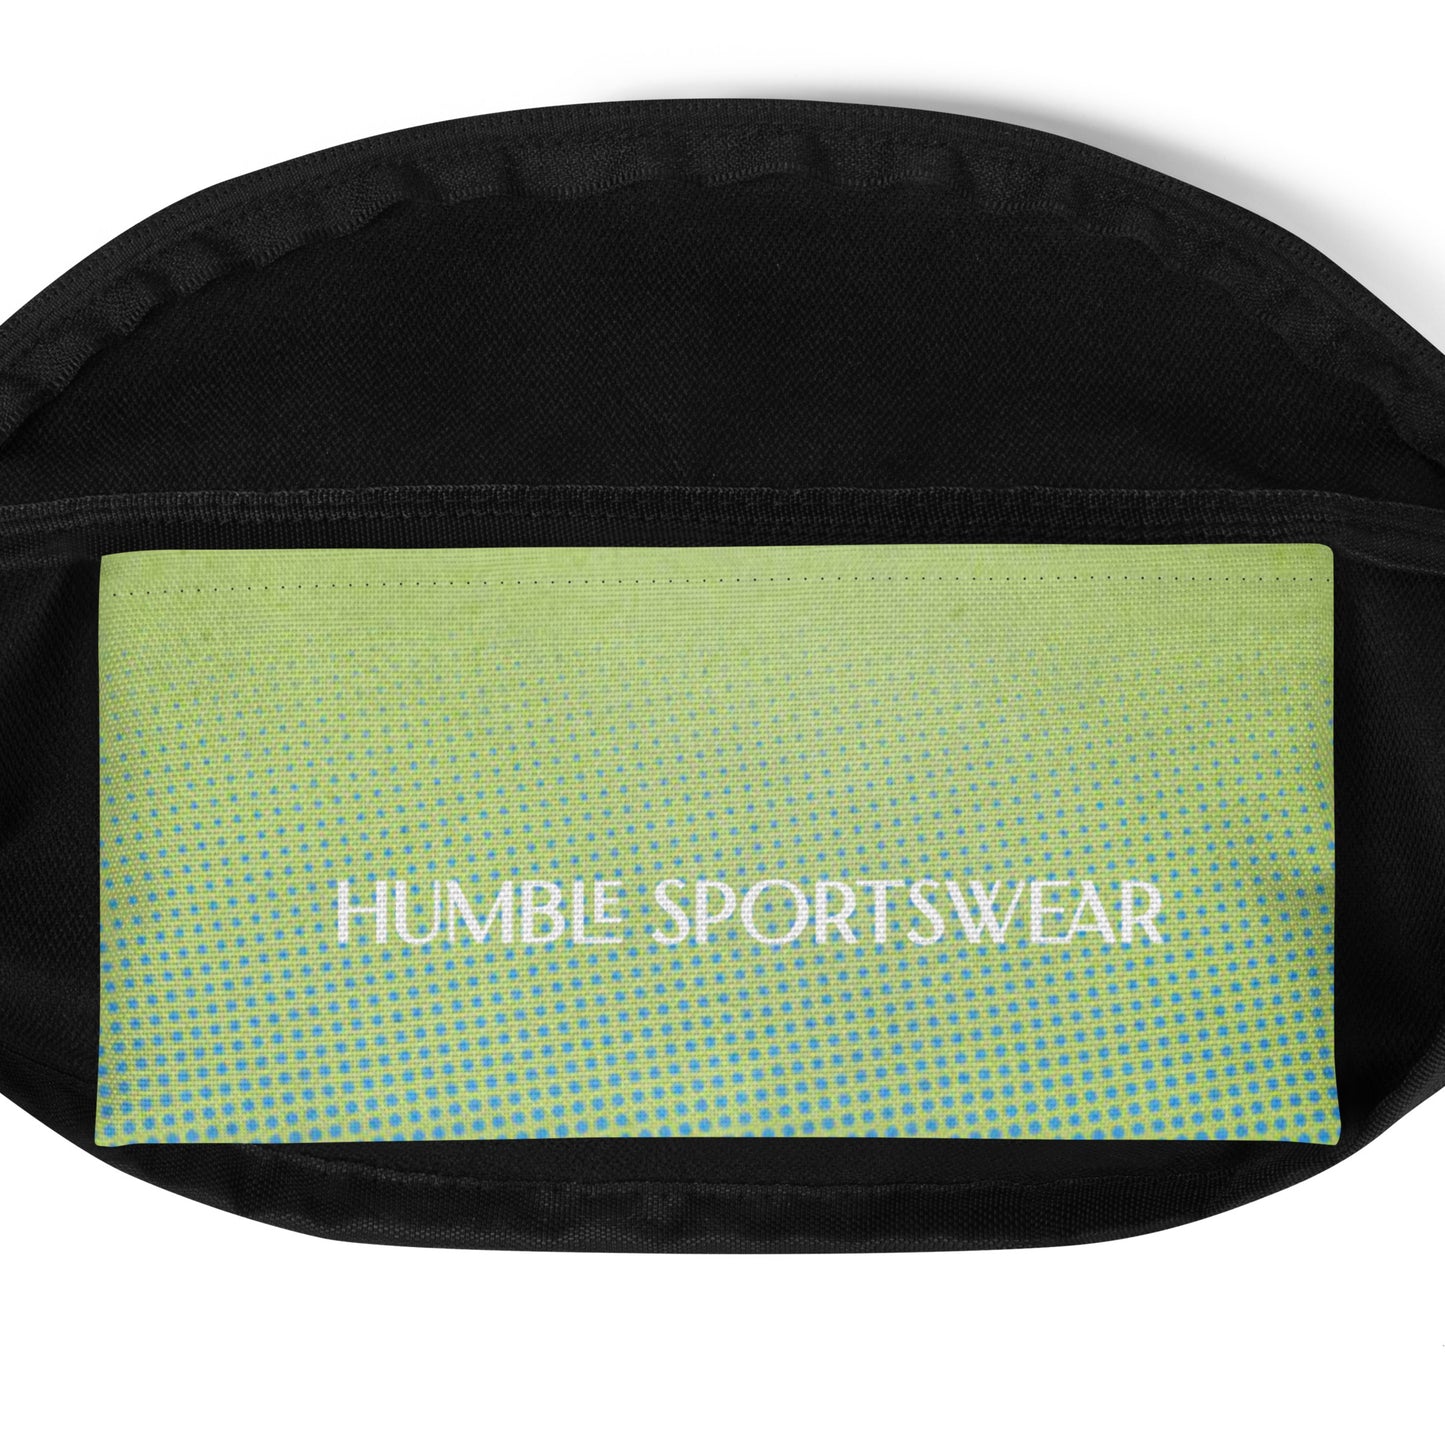 Humble Sportswear, belt bag, Fanny pack, unisex waist bag, green Fanny pack